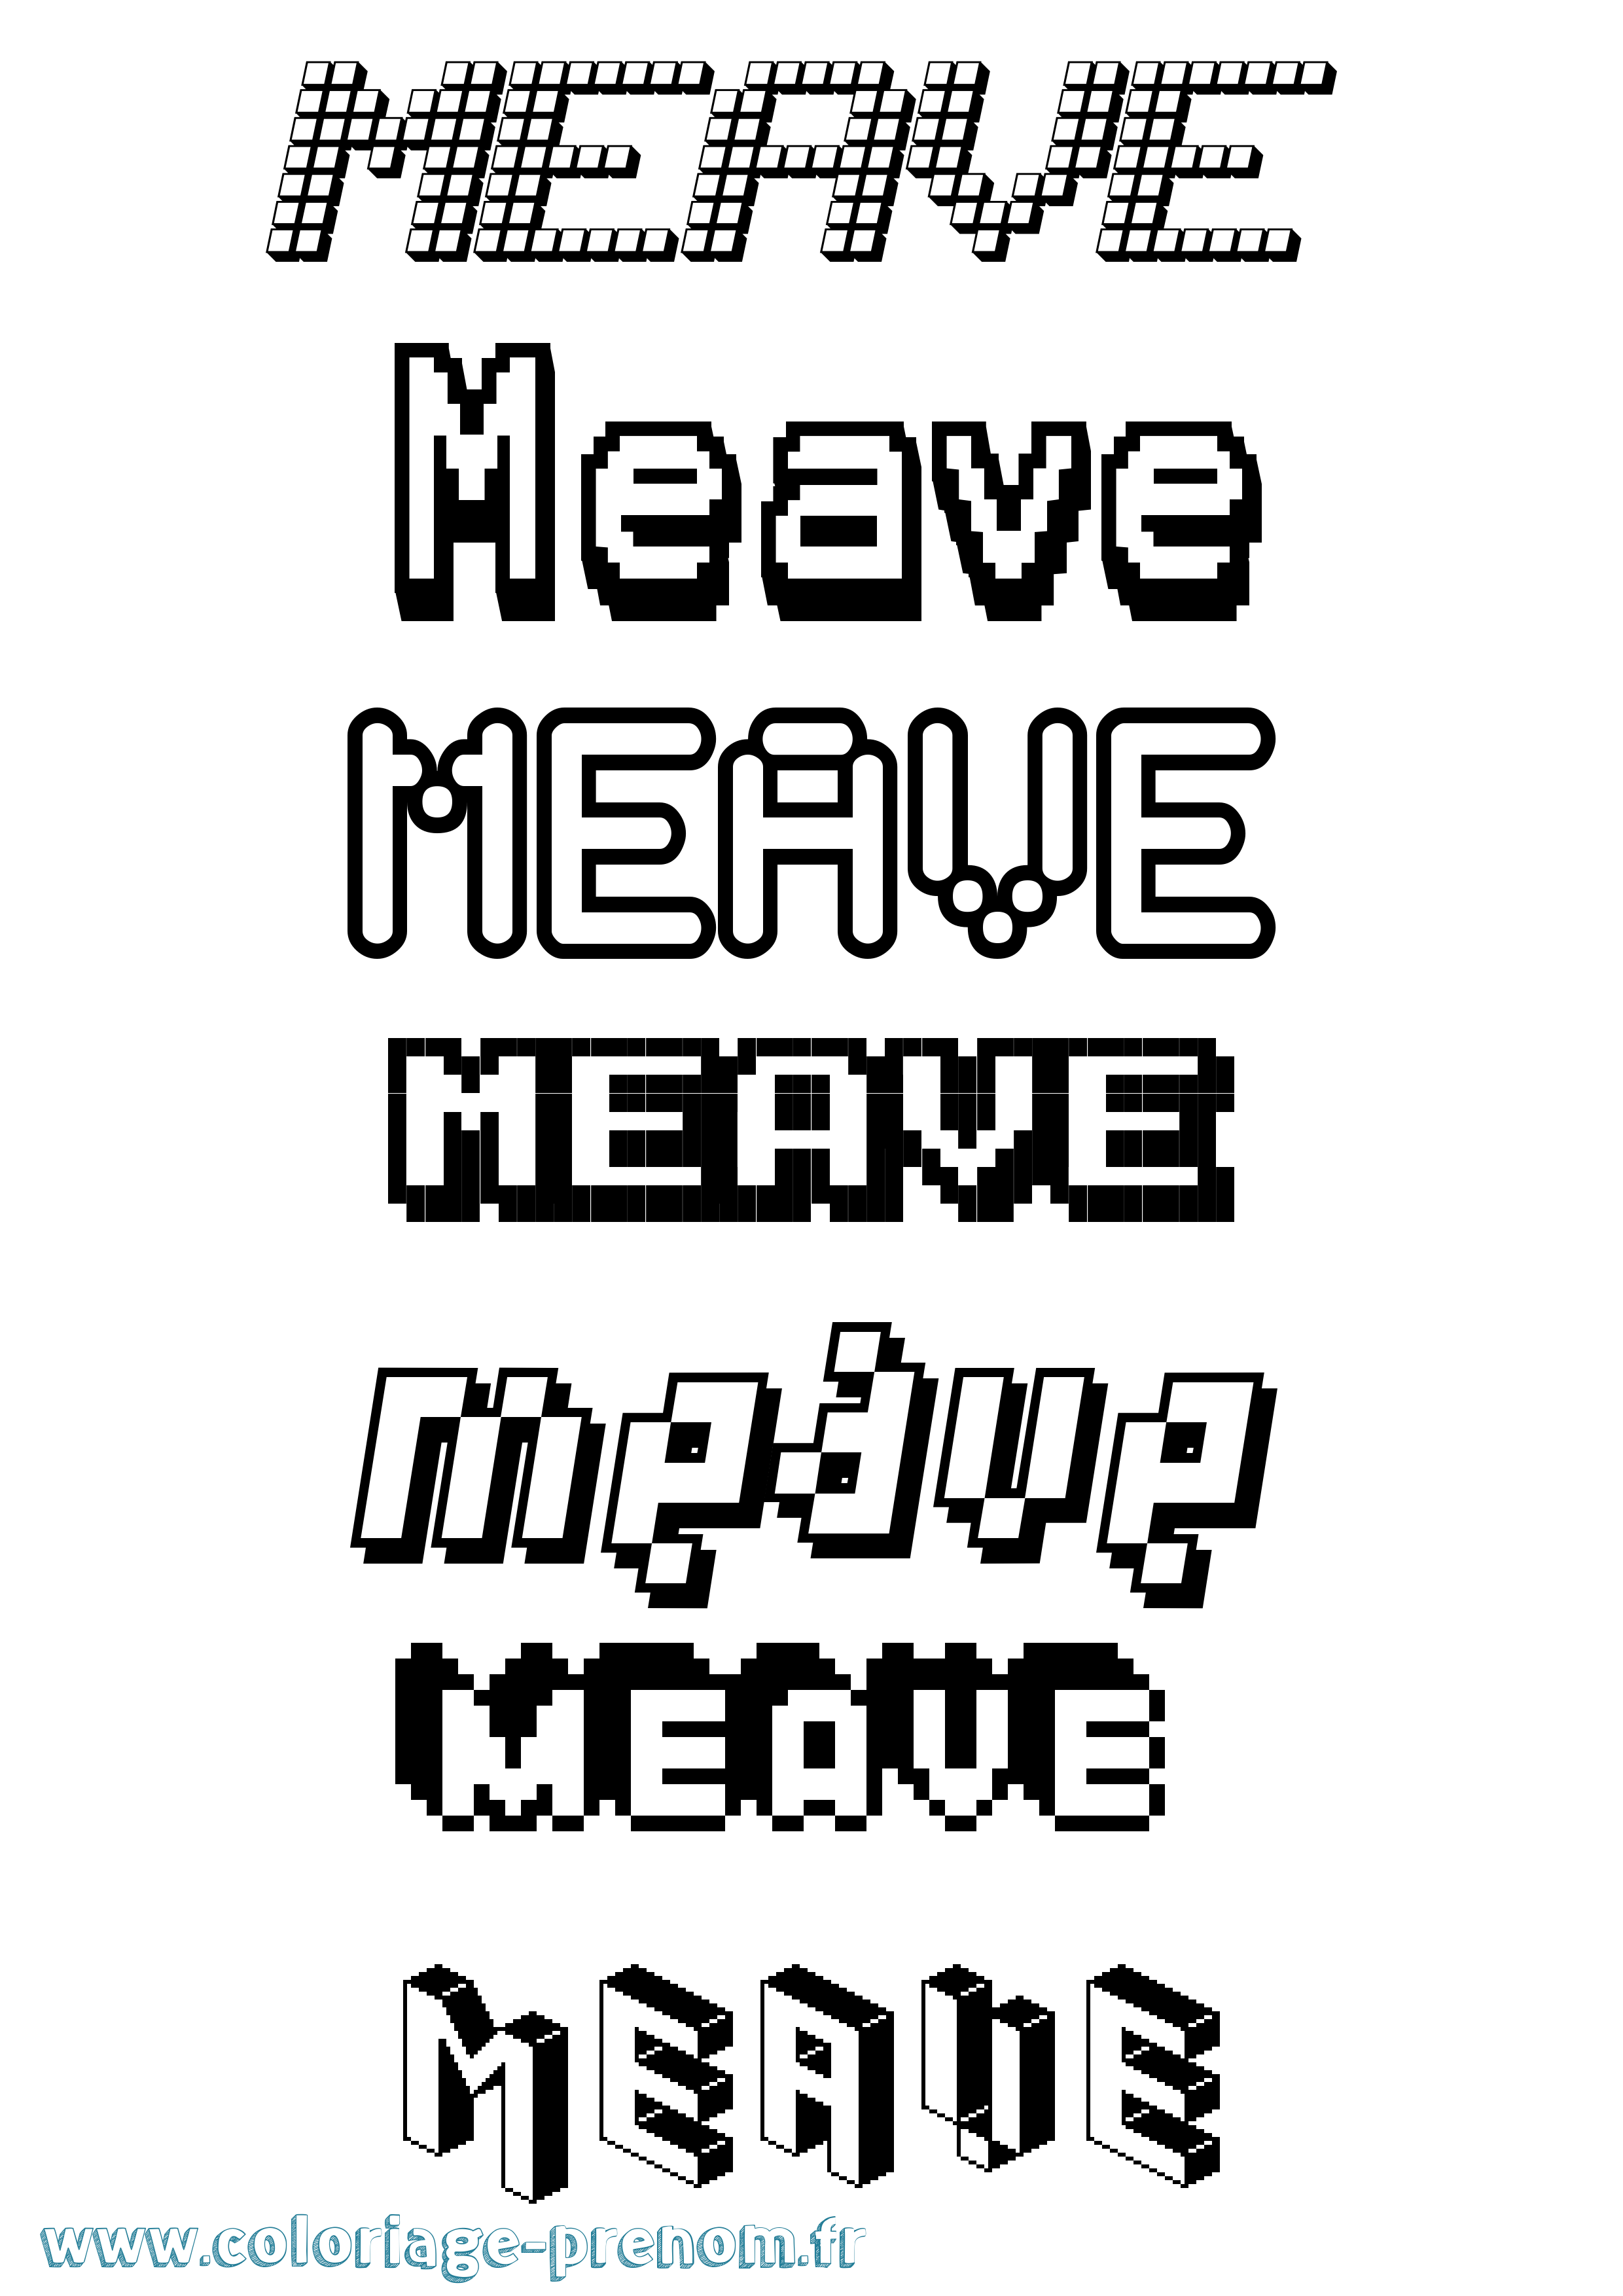 Coloriage prénom Meave Pixel